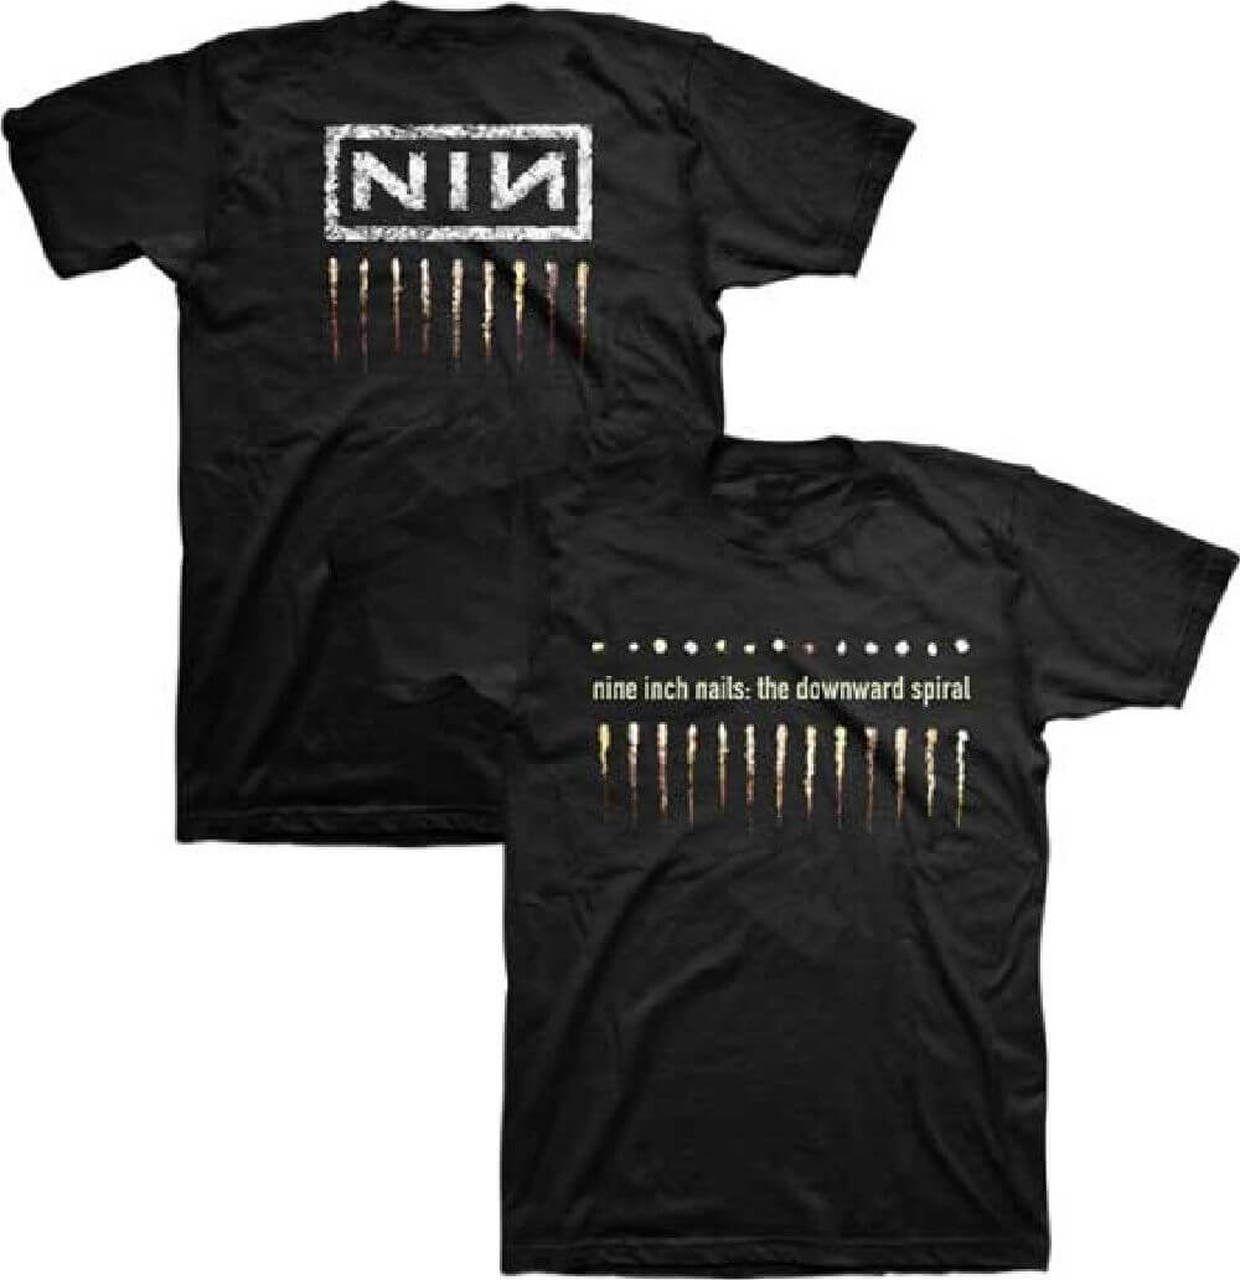 Nin Logo - Nine Inch Nails T Shirt Inch Nails The Downward Spiral Album Artwork With NIN Logo. Men's Black Shirt